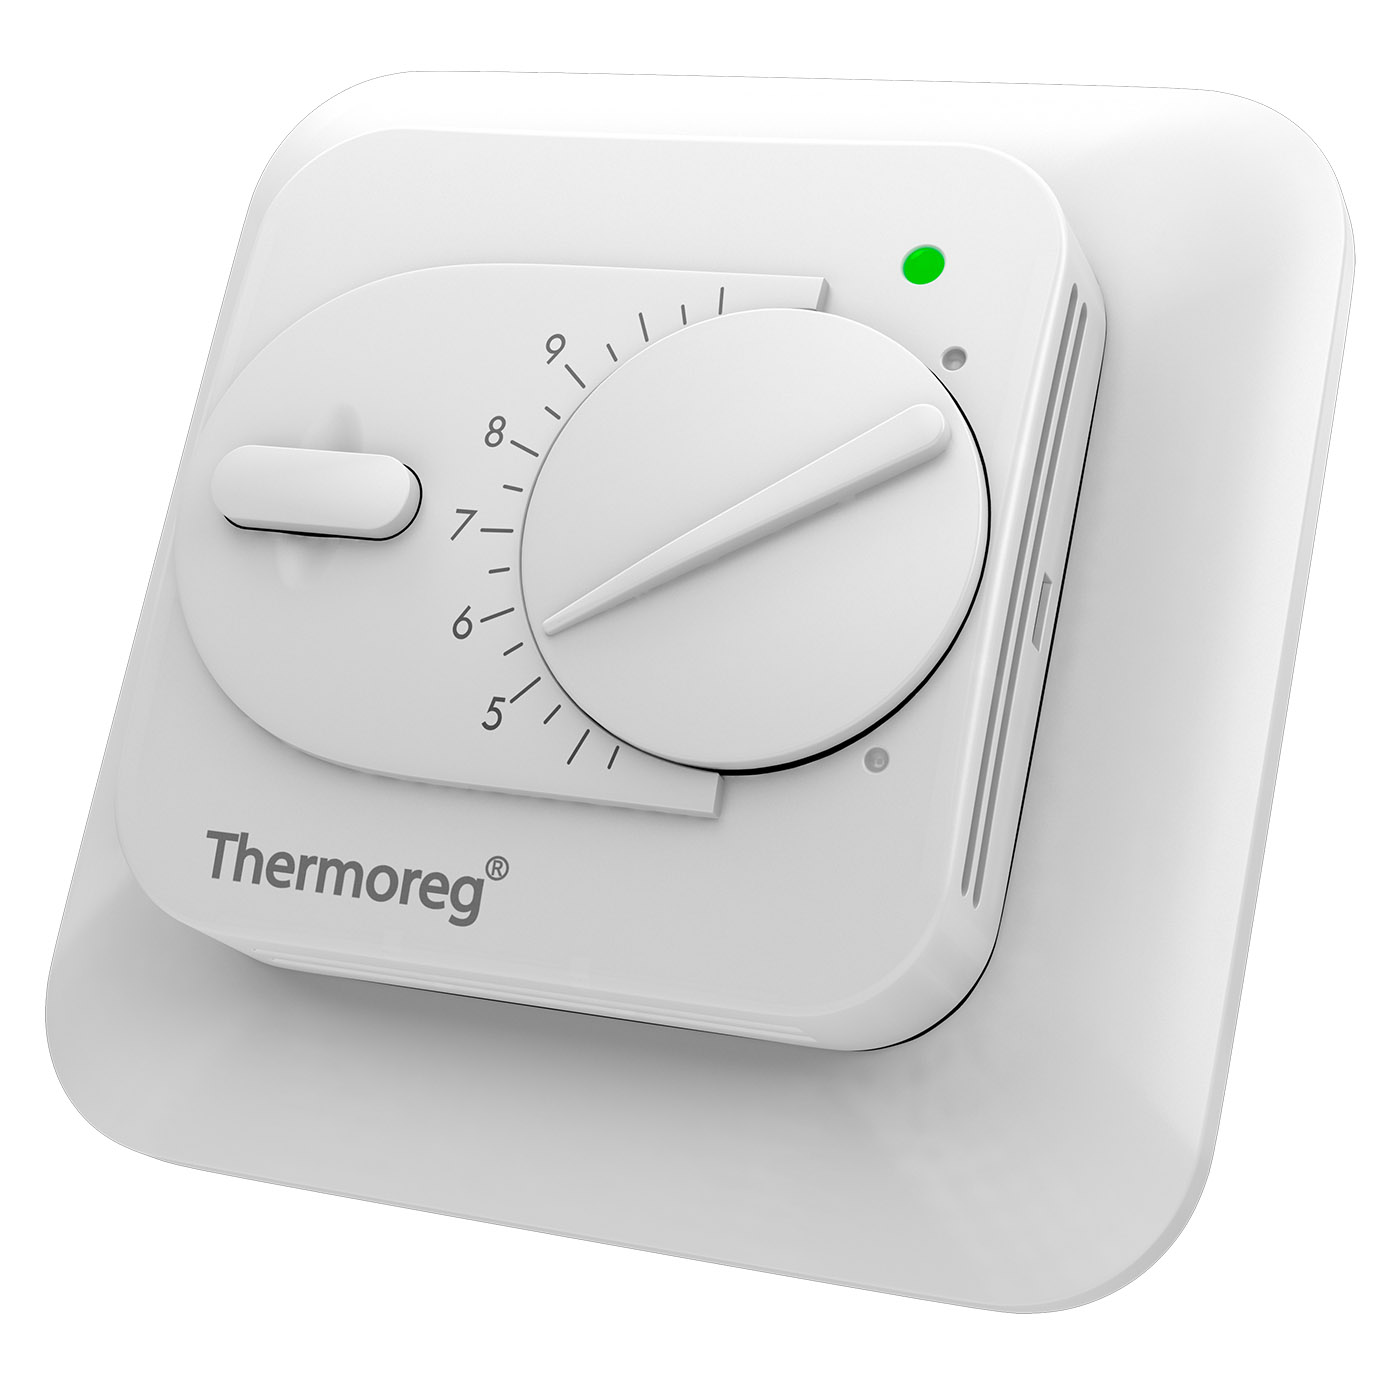 терморегулятор для теплого пола в интерьере